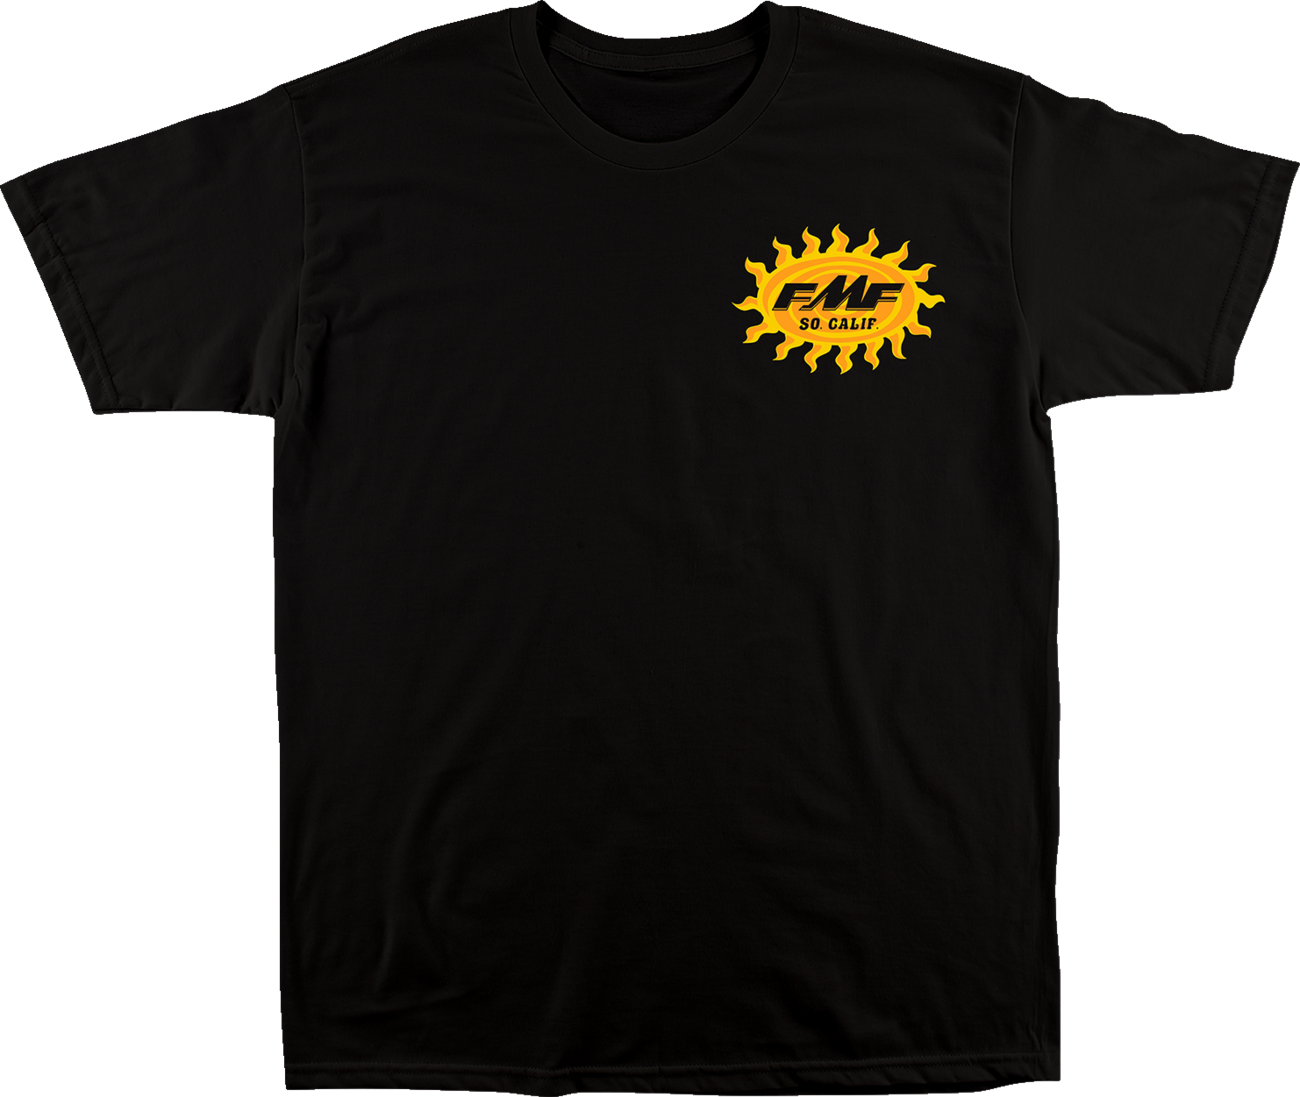 FMF Sunny T-Shirt - Black - XL SP22118907BKXL 3030-21879